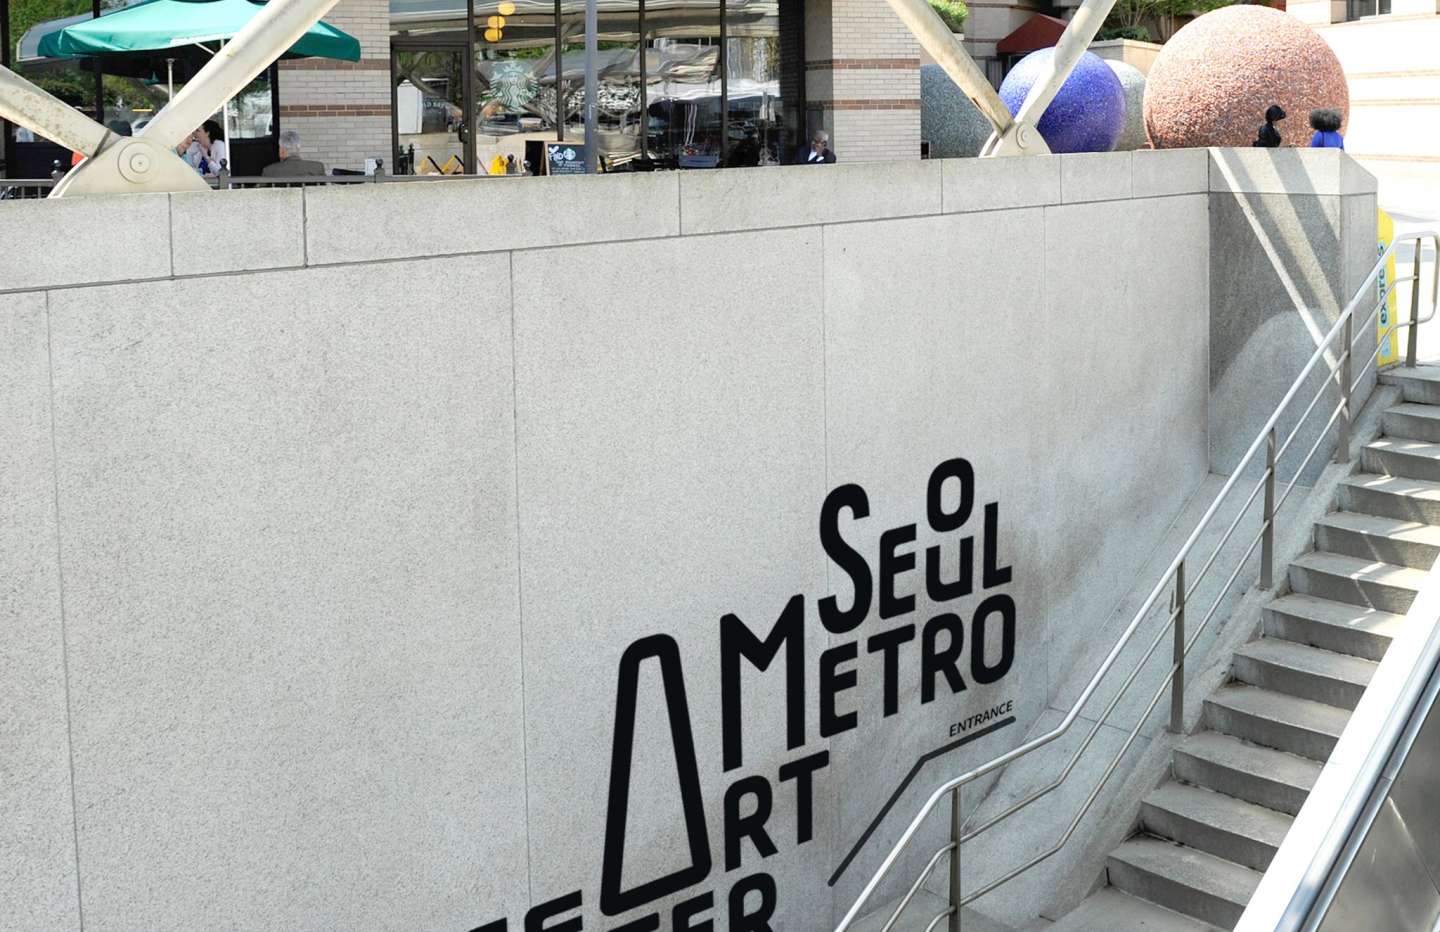 Seoul Metro Art Center